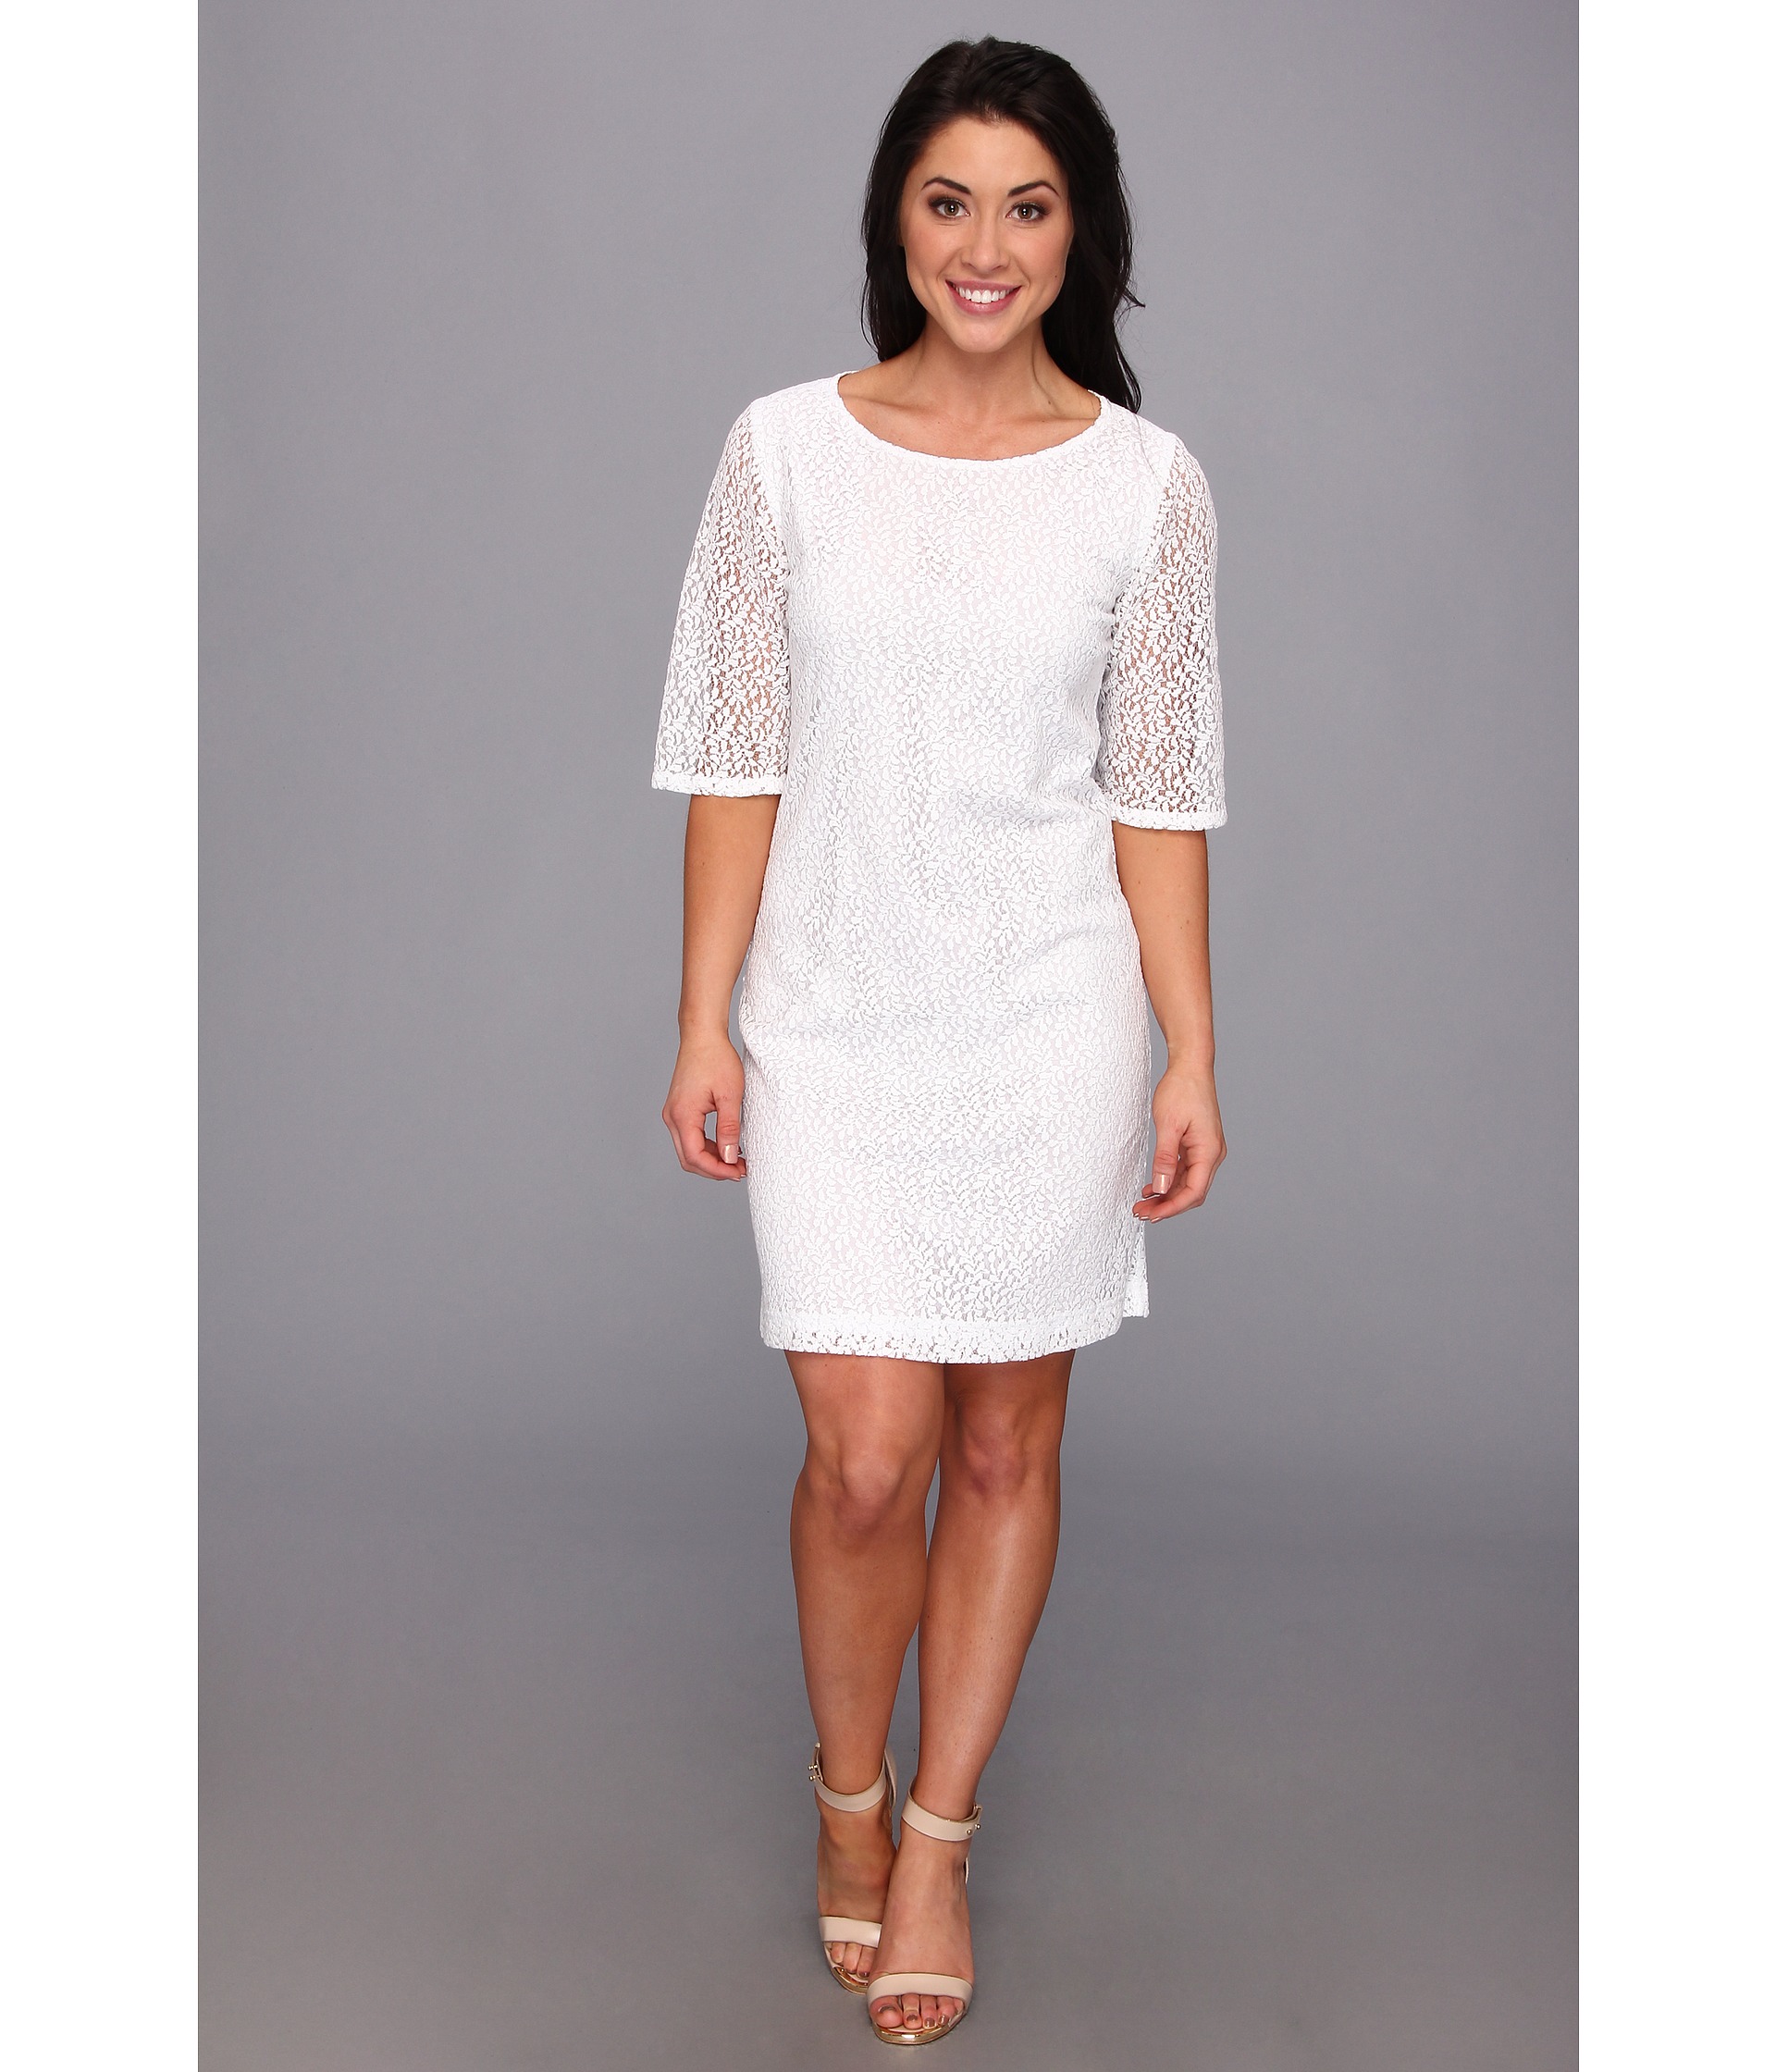 Pendleton Petite Lace Dress White Lace | Shipped Free at Zappos